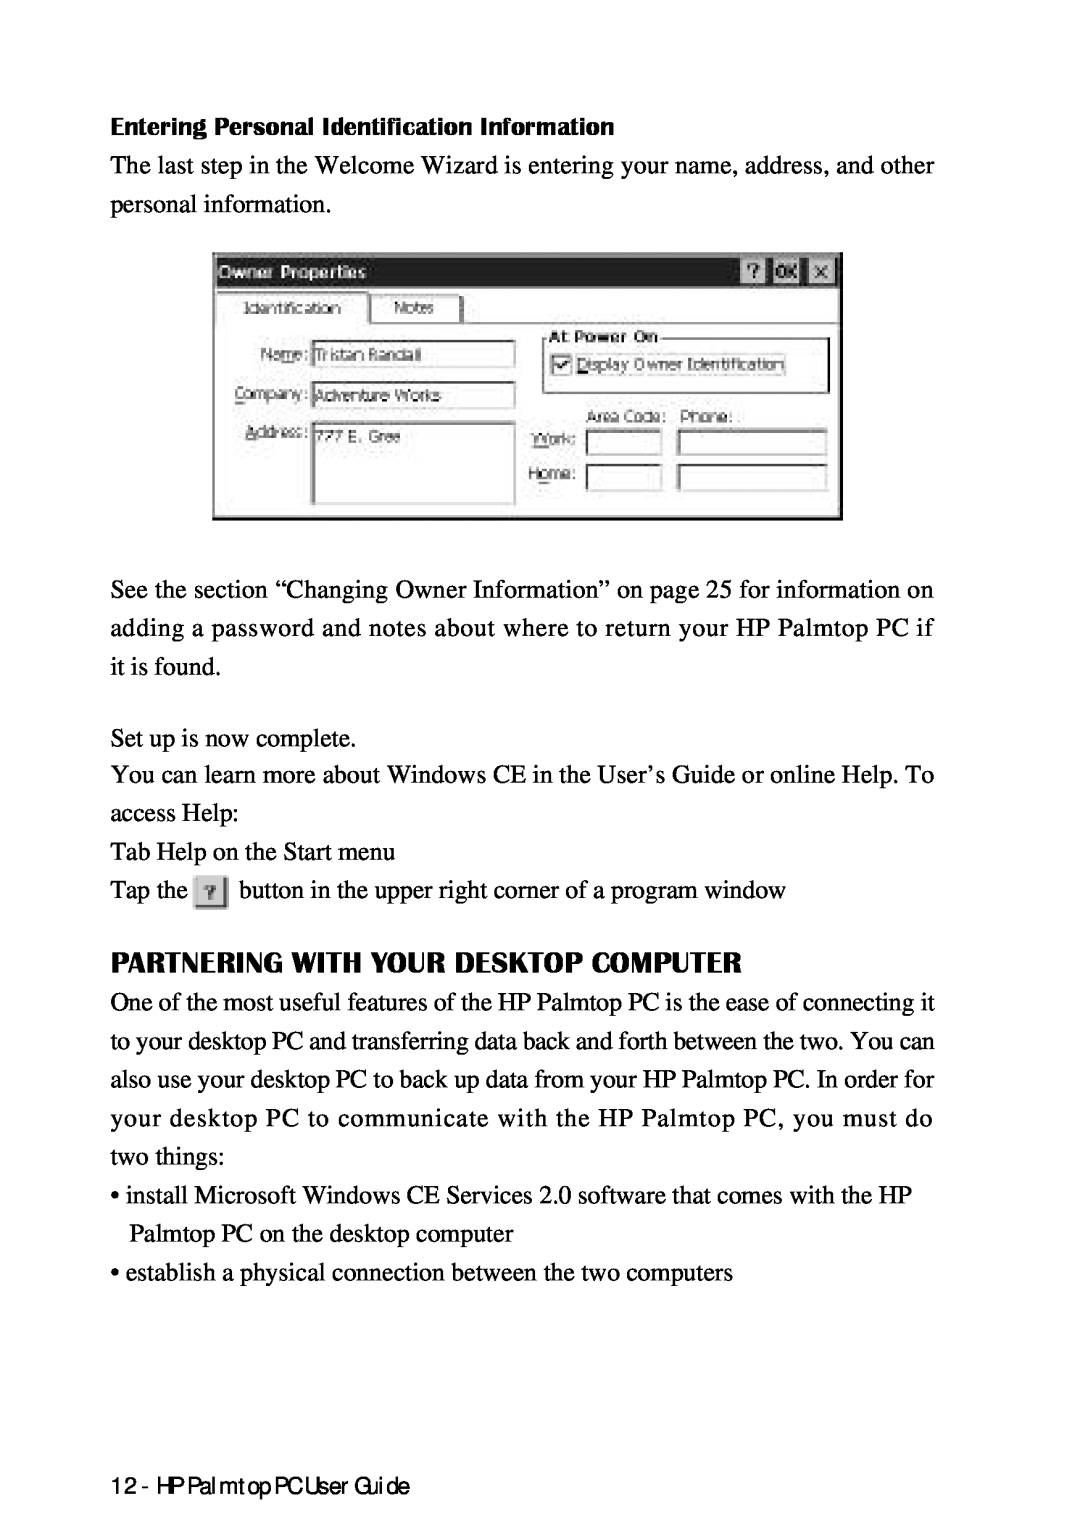 HP Palmtop 660LX, Palmtop 620X manual Partnering With Your Desktop Computer, Entering Personal Identification Information 